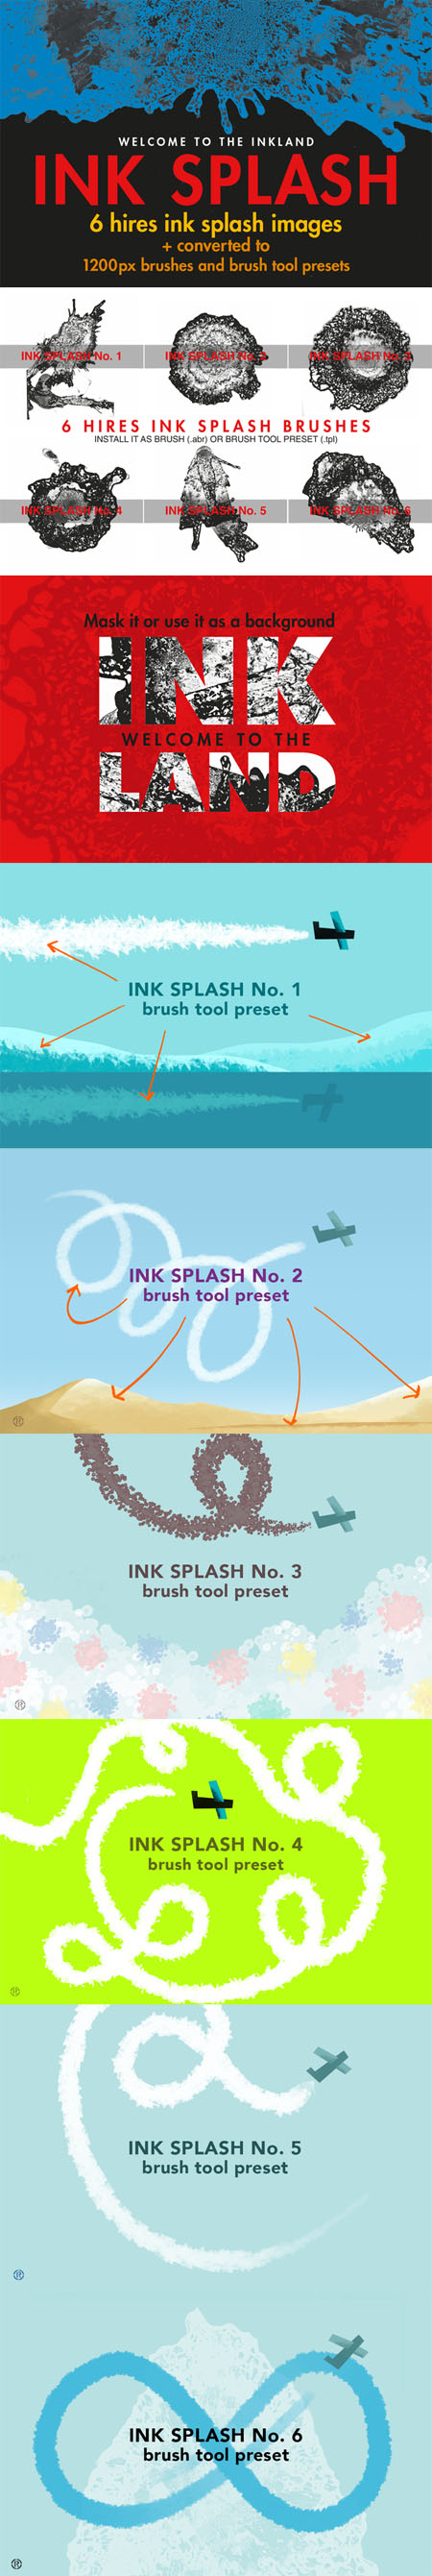 CM - Ink Splash - 6 Images and Brushes 492920